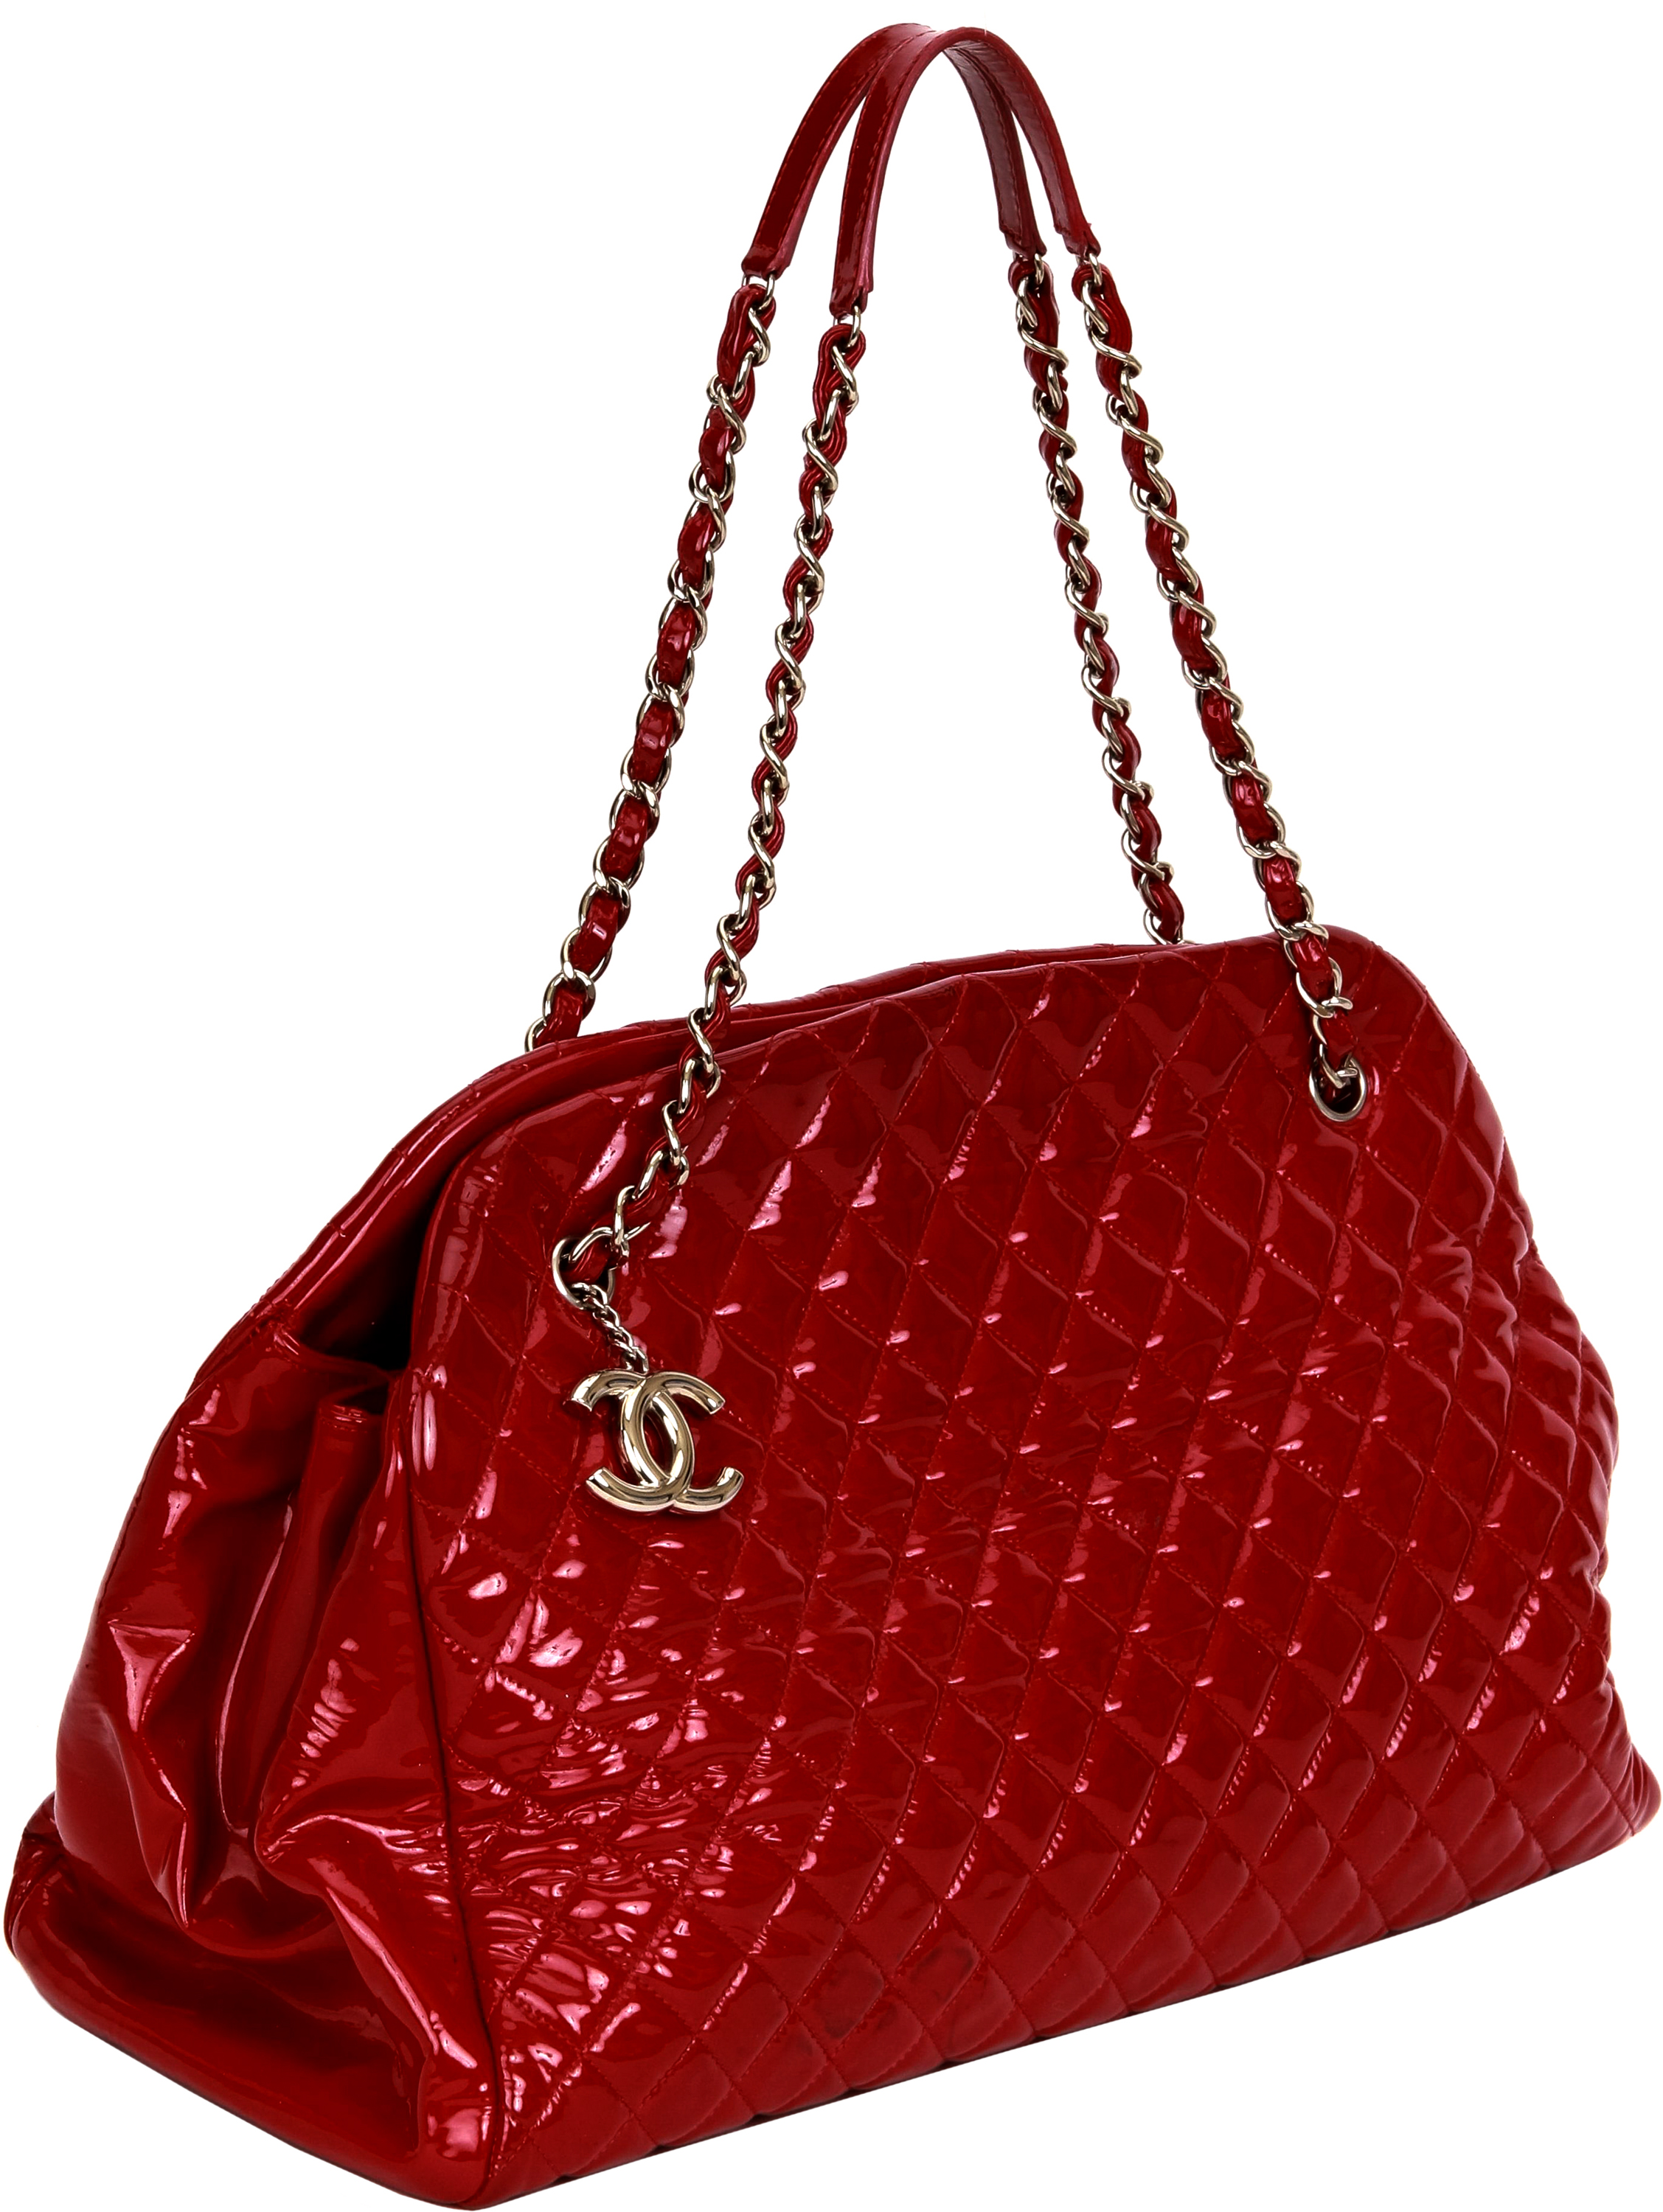 Burgundy Chanel Bag - 261 For Sale on 1stDibs